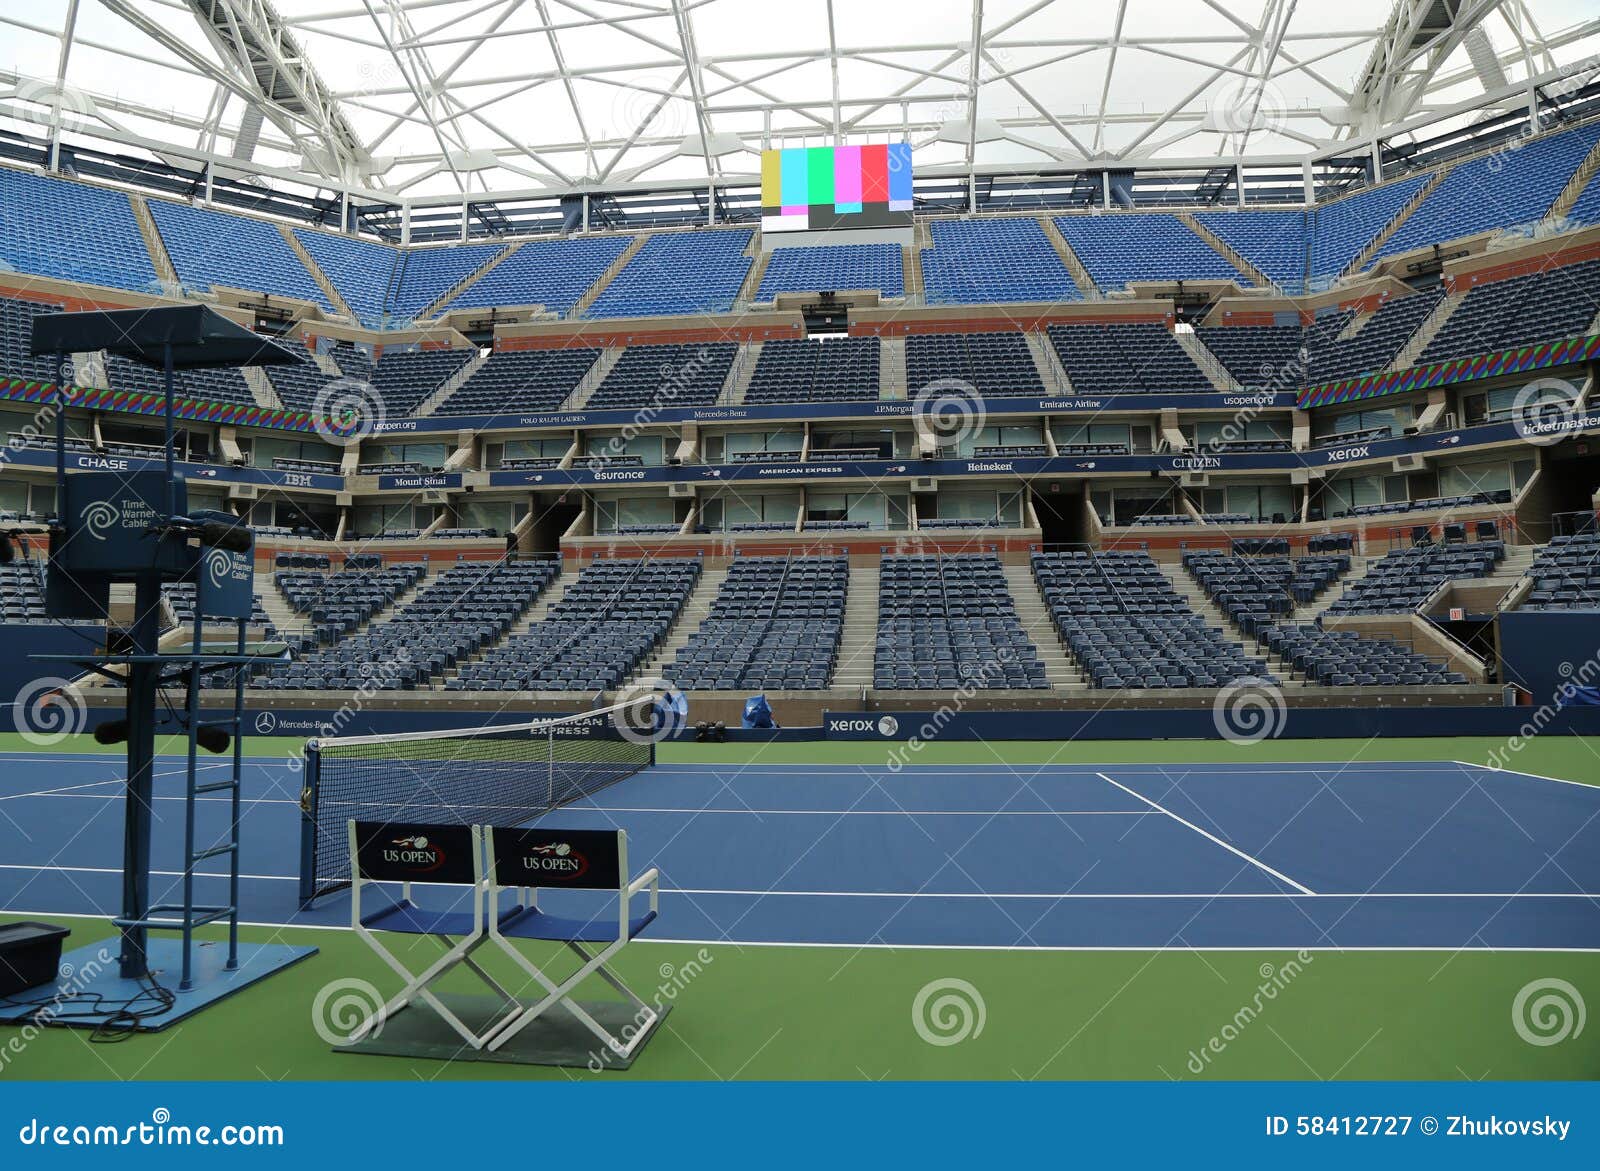 Ashe Stadium - US Open Tennis Foto de Stock Editorial - Imagem de povos,  arena: 157303493